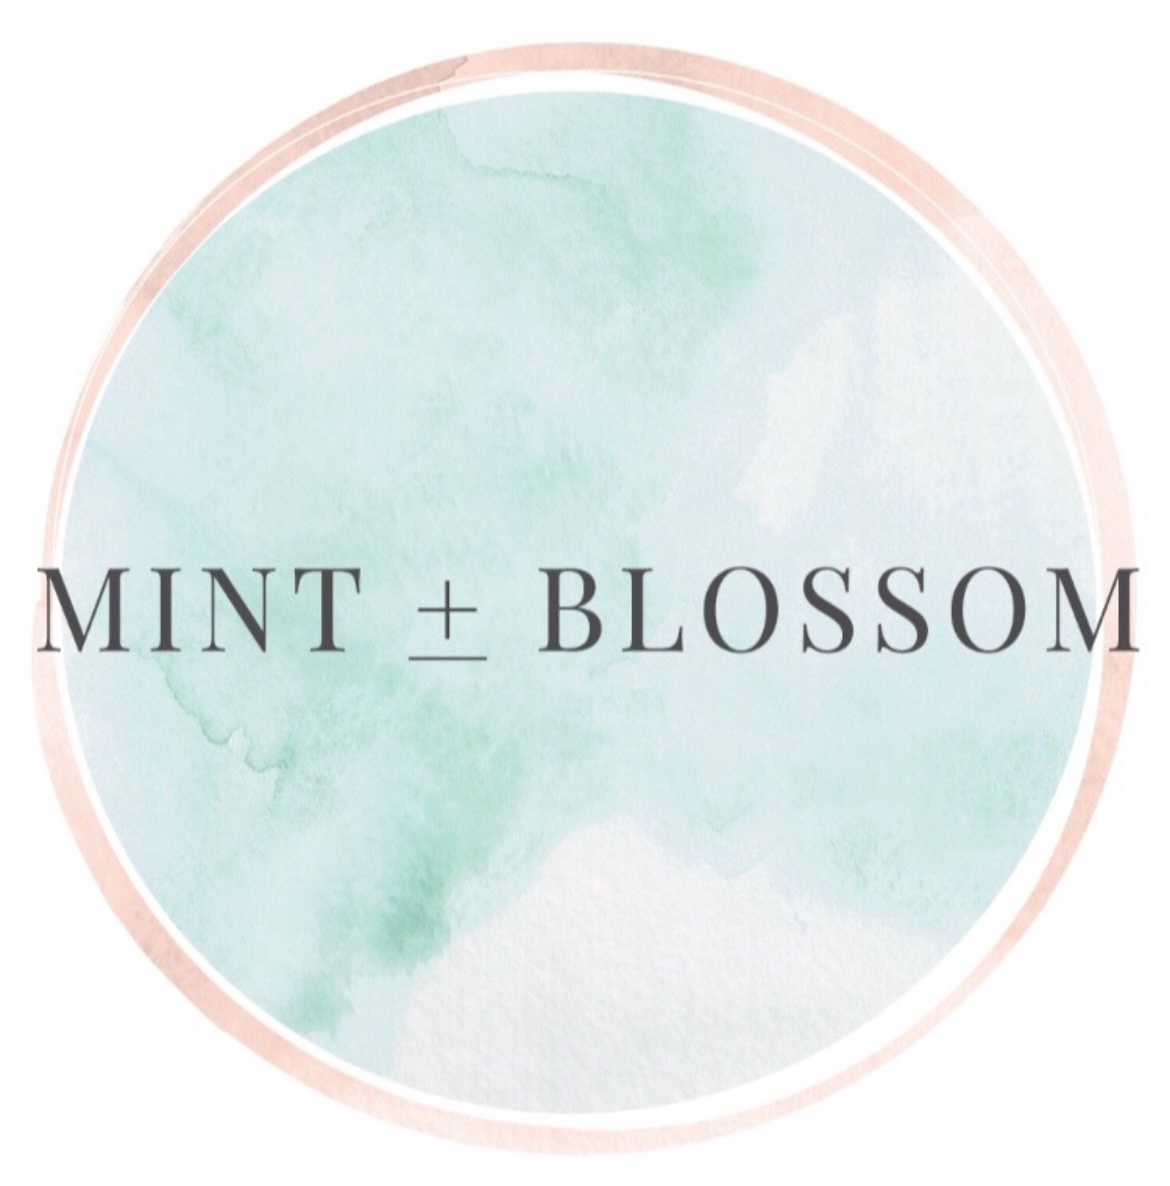 Mint + Blossom business logo